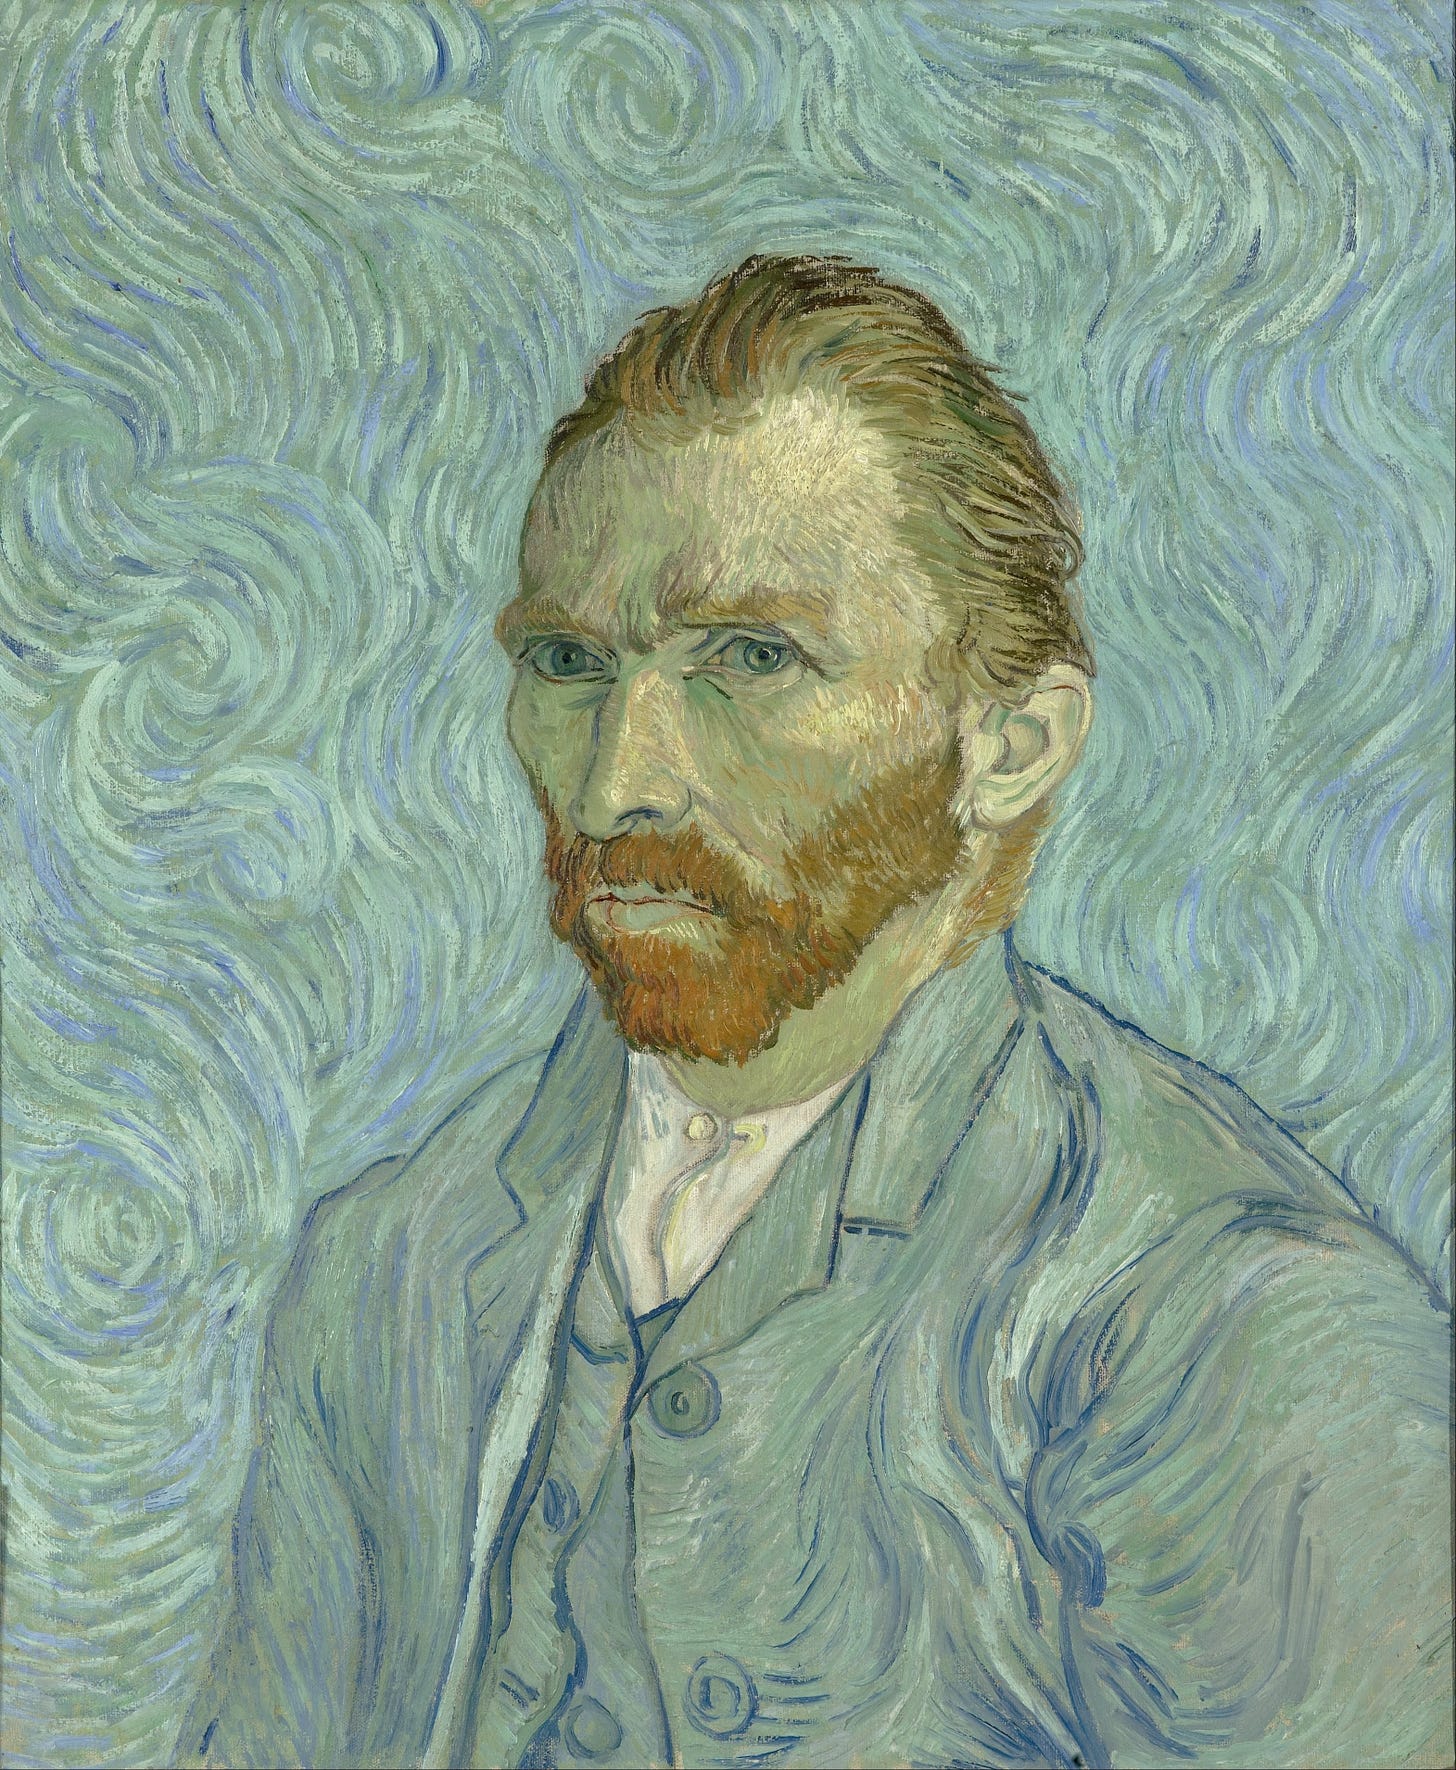 File:Vincent van Gogh - Self-Portrait - Google Art Project.jpg - Wikipedia